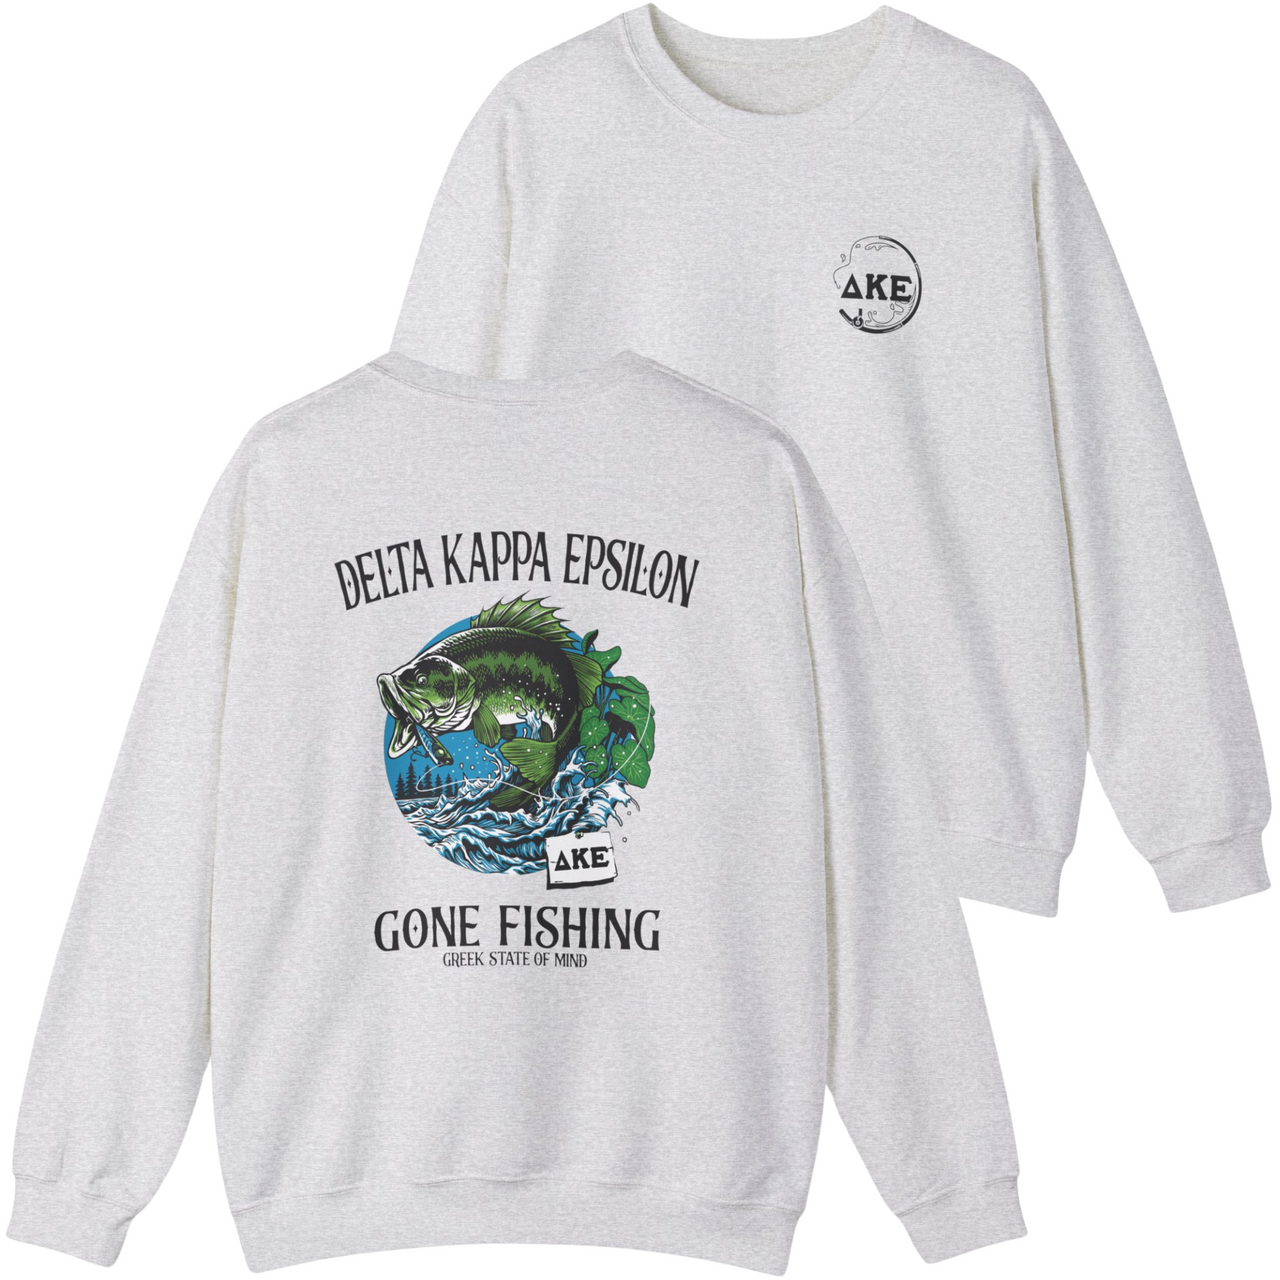 Delta Kappa Epsilon Graphic Crewneck Sweatshirt | Gone Fishing